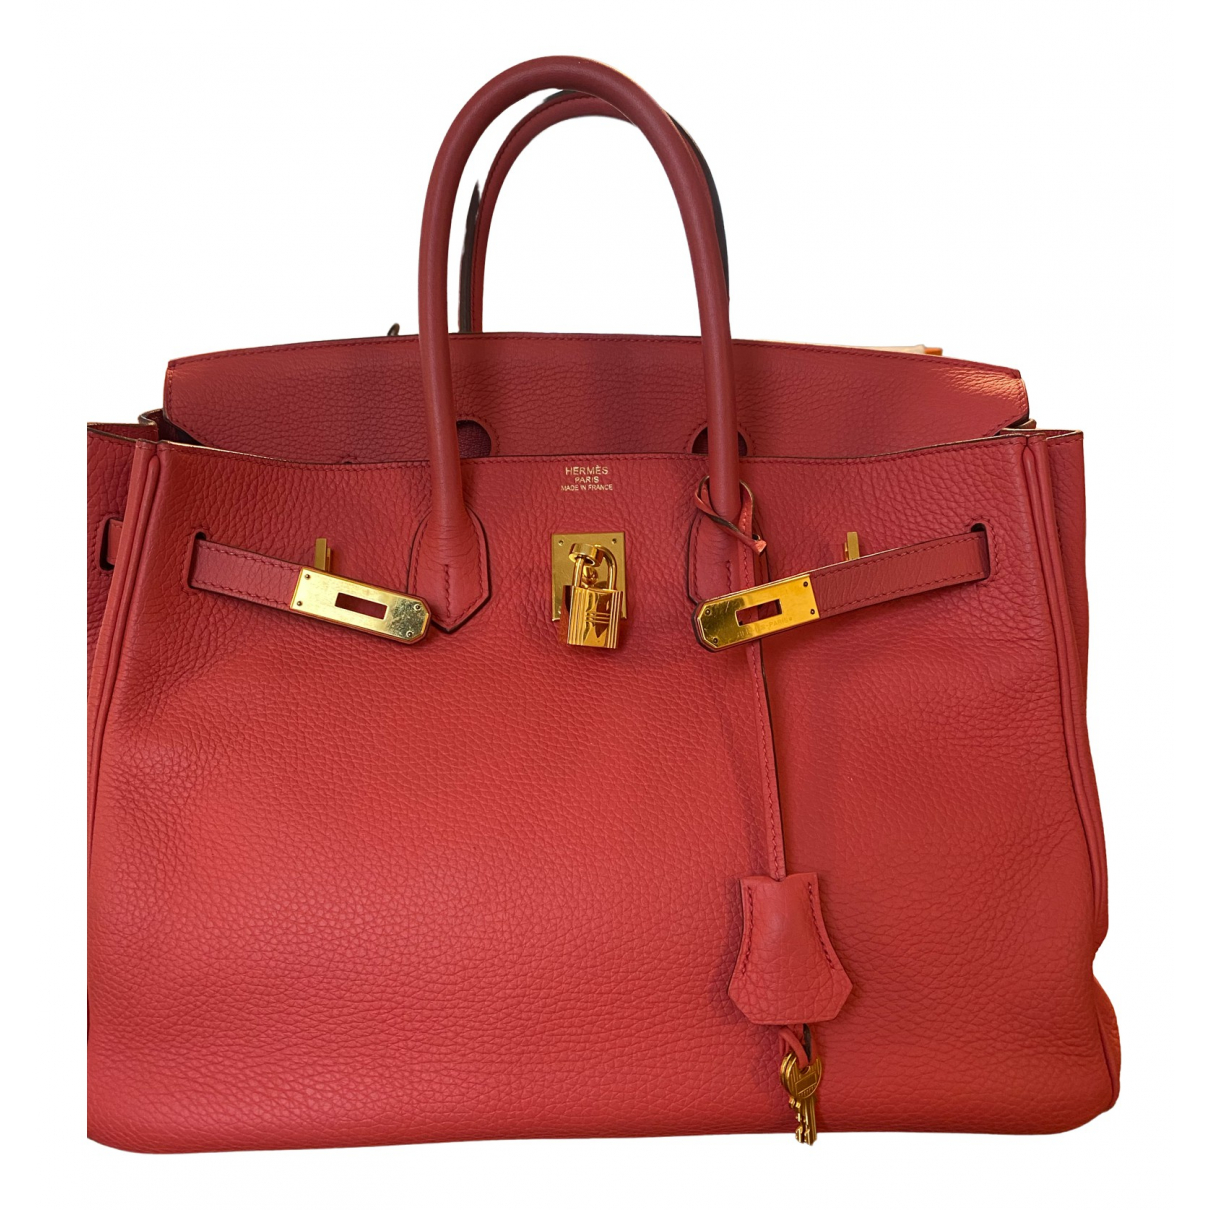 Birkin 35 Limited price leather handbag Dallas Mall